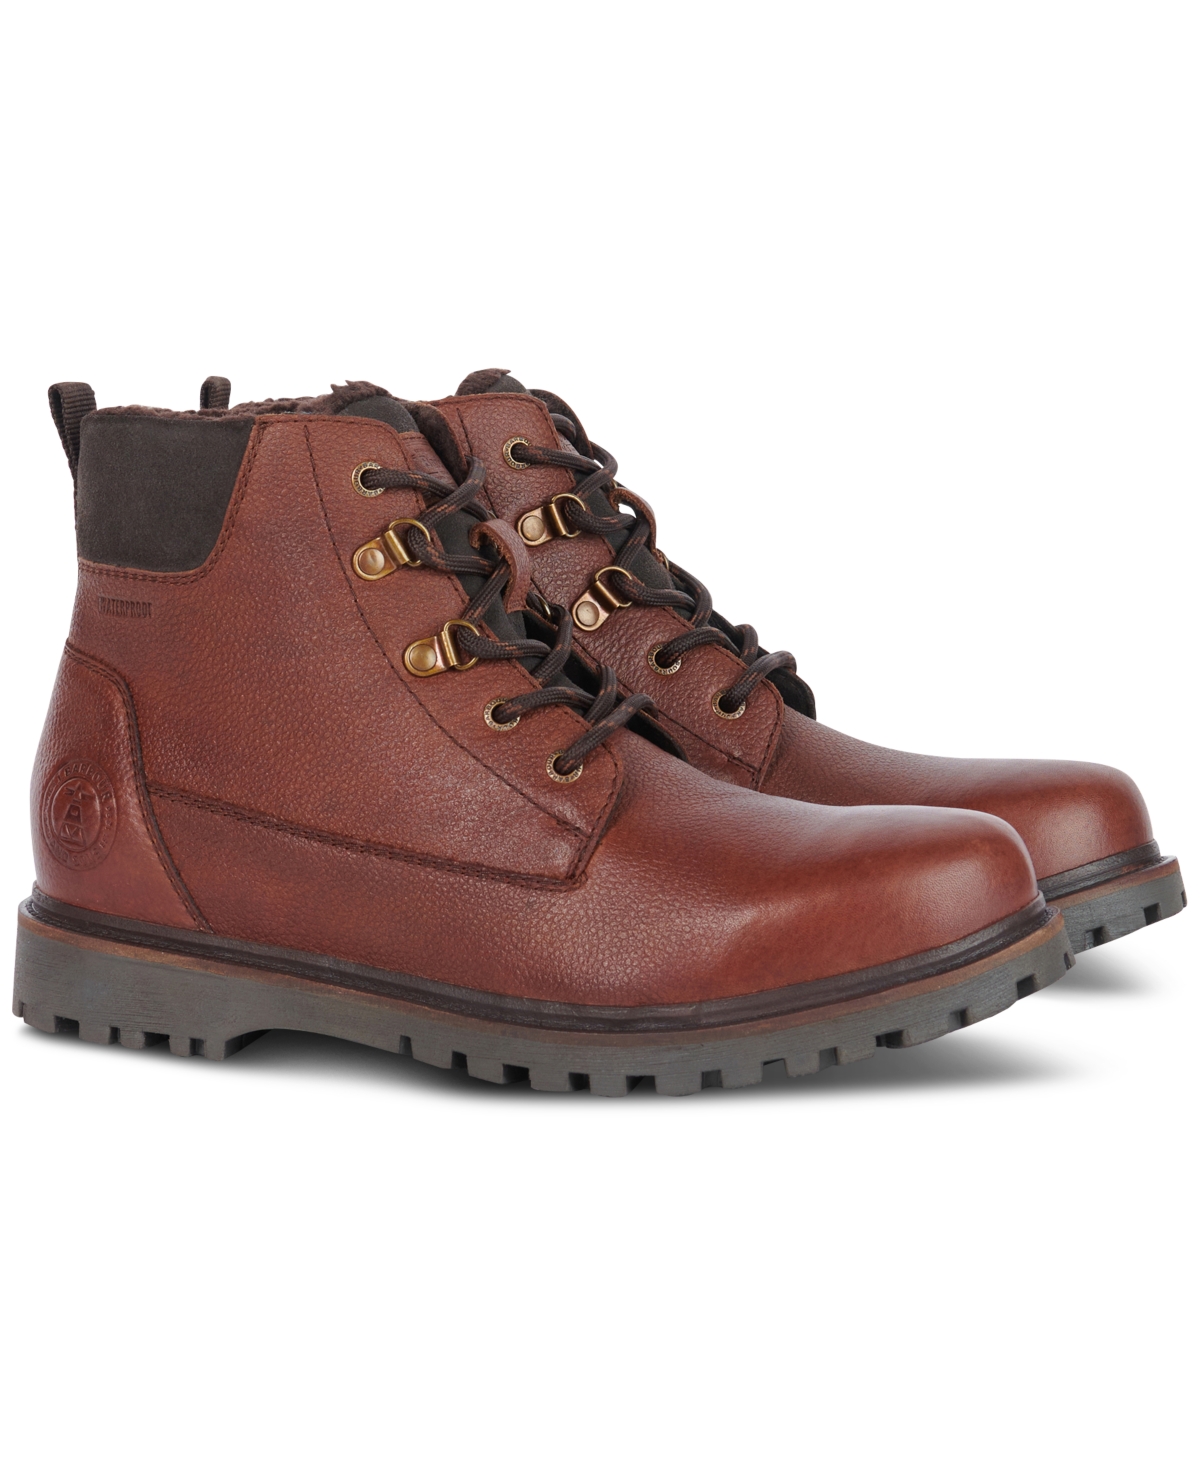 Men's Storr Waterproof Lace-Up Leather Derby Boots - Conker